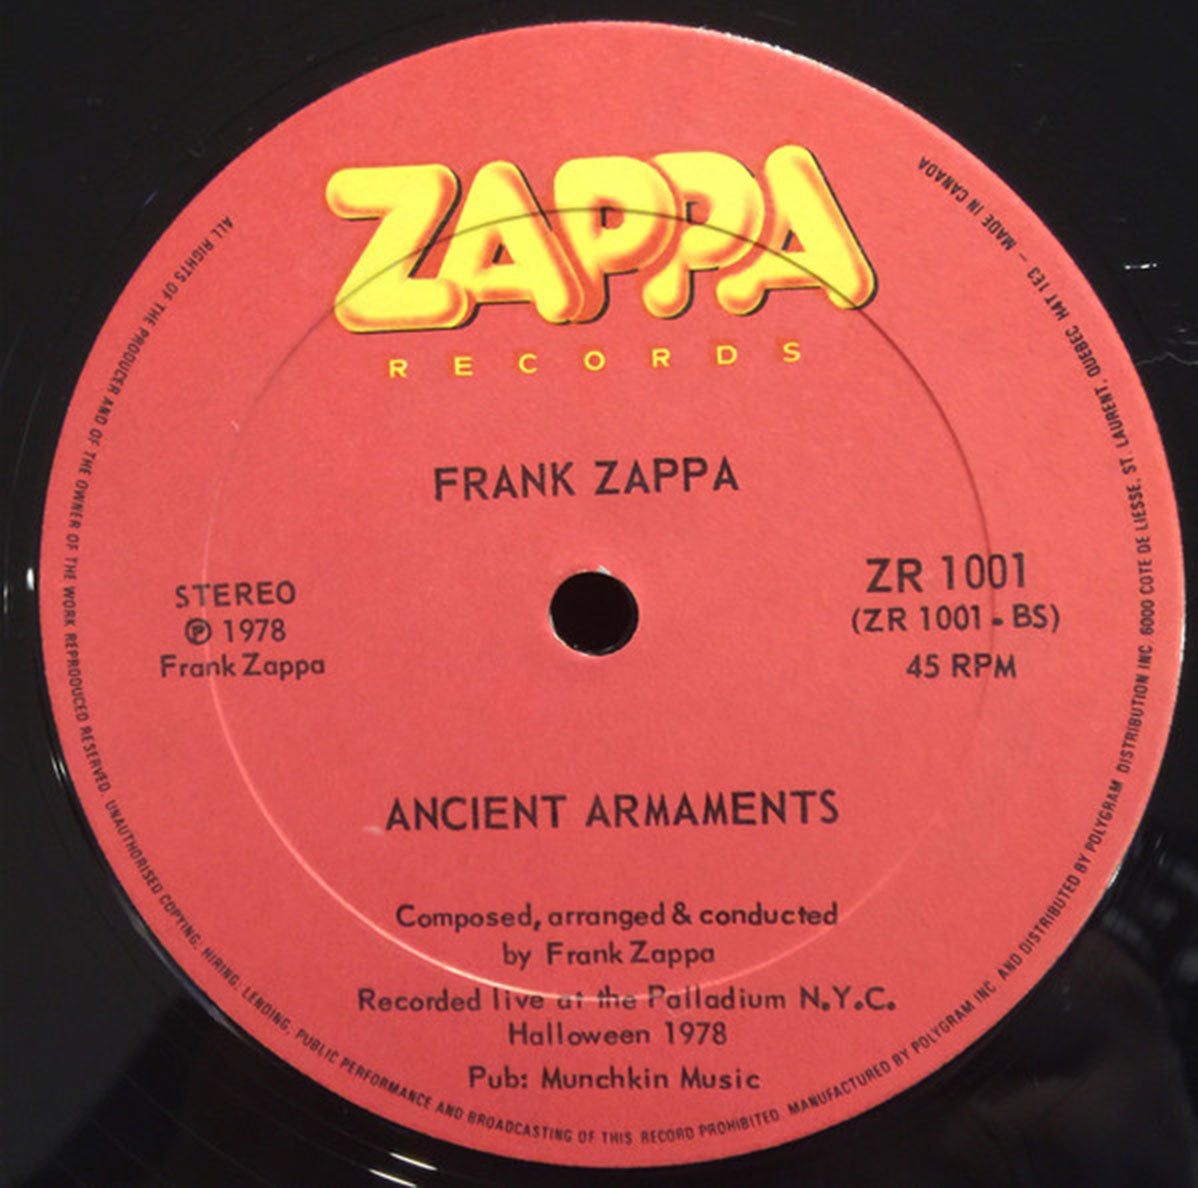 Frank Zappa – I Don't Wanna Get Drafted!